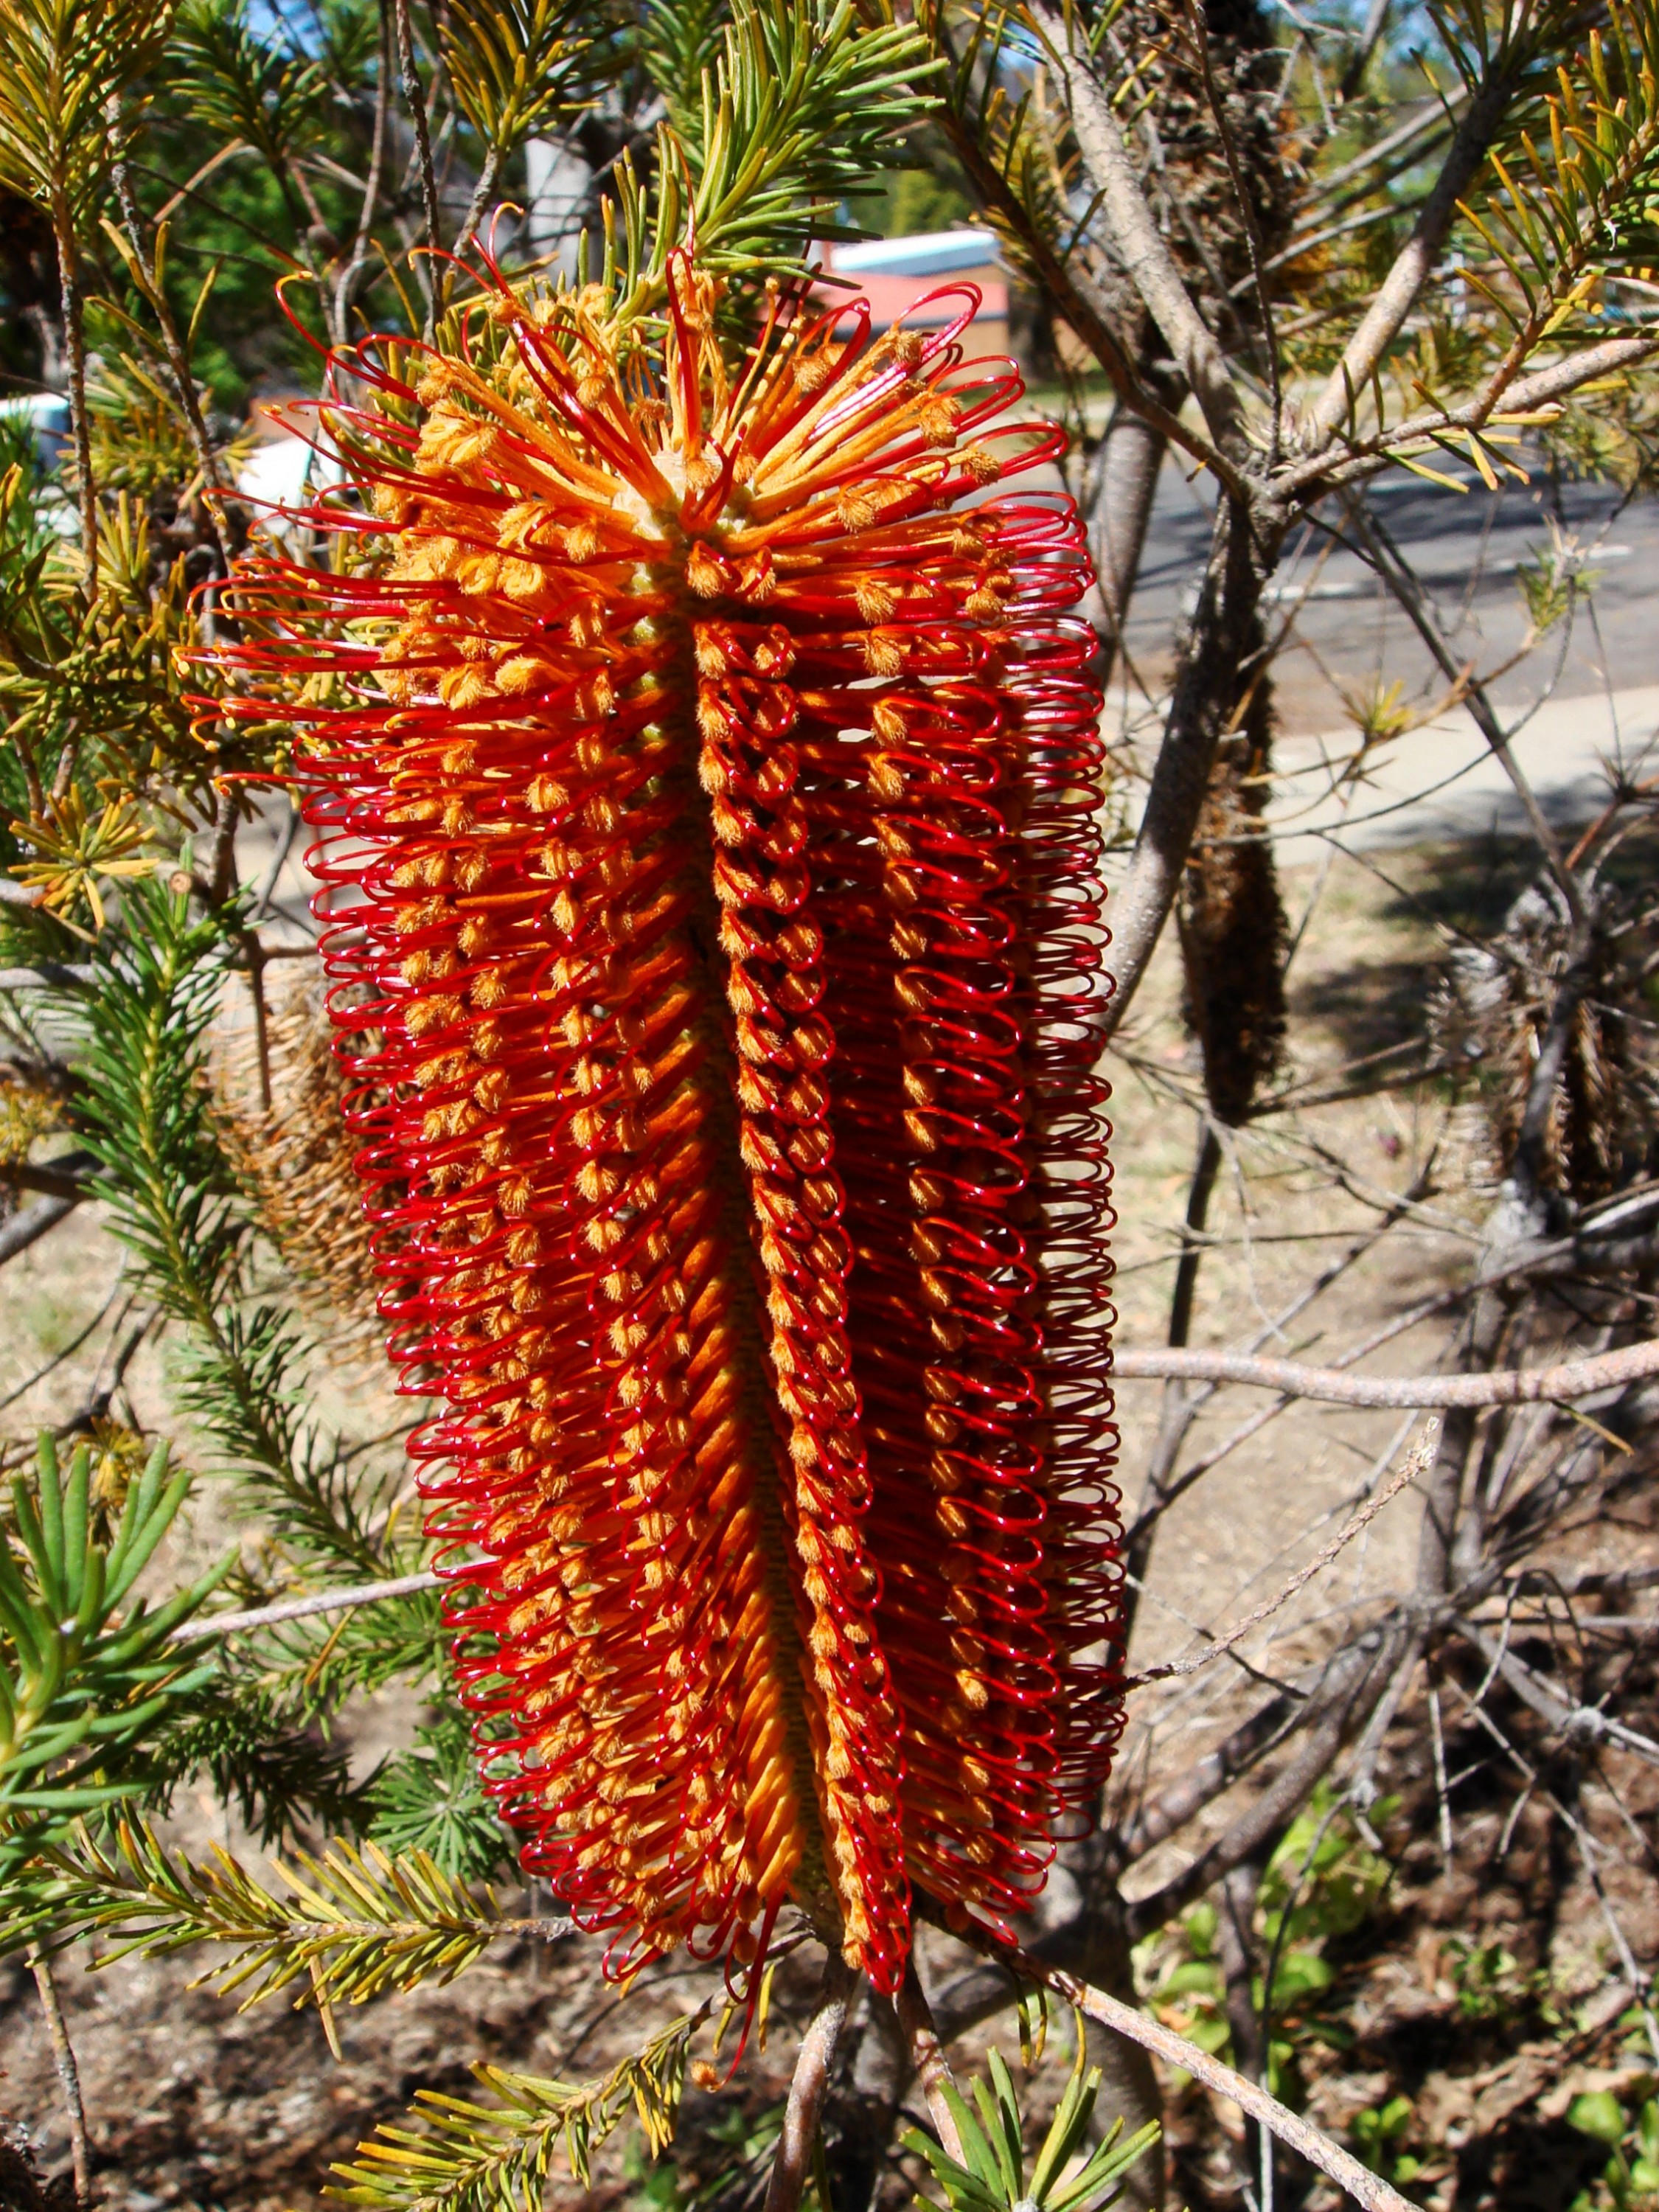 Native Flowers of Australia